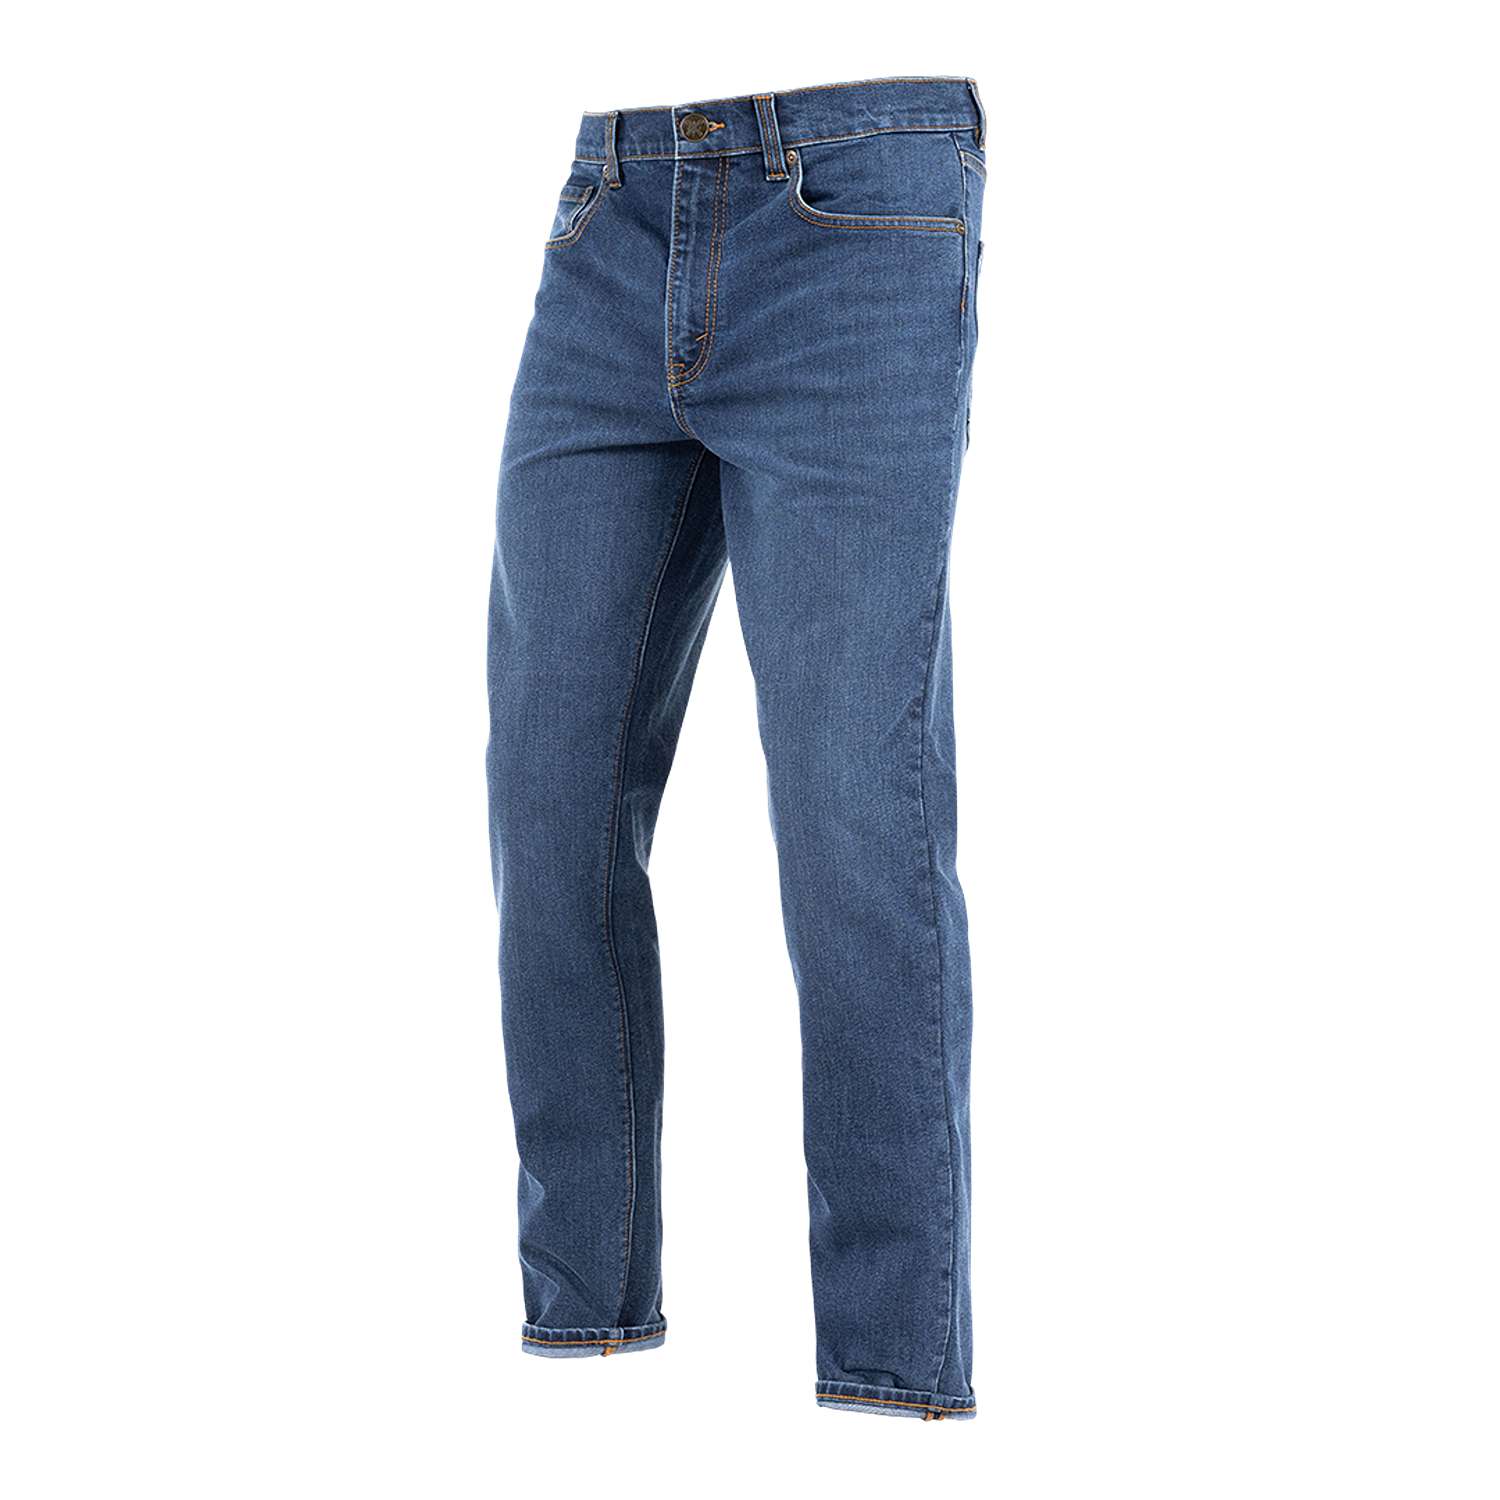 Image of John Doe Classic Tapered Jeans Indigo Size W31/L32 ID 4250553246974